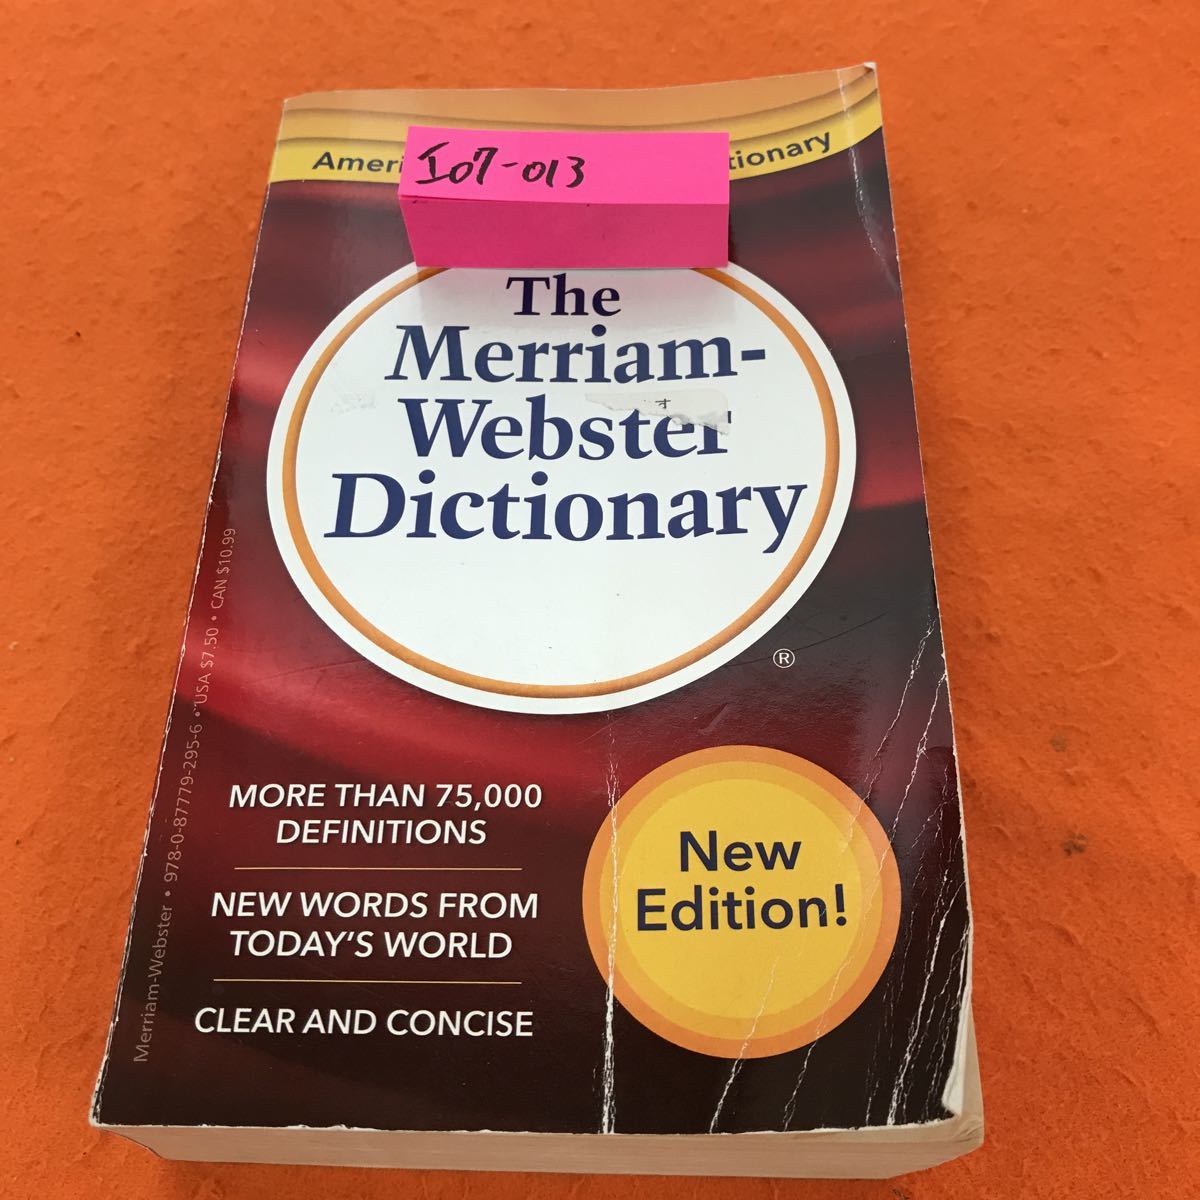 I07-013 Merriam-Ebster Dictionary